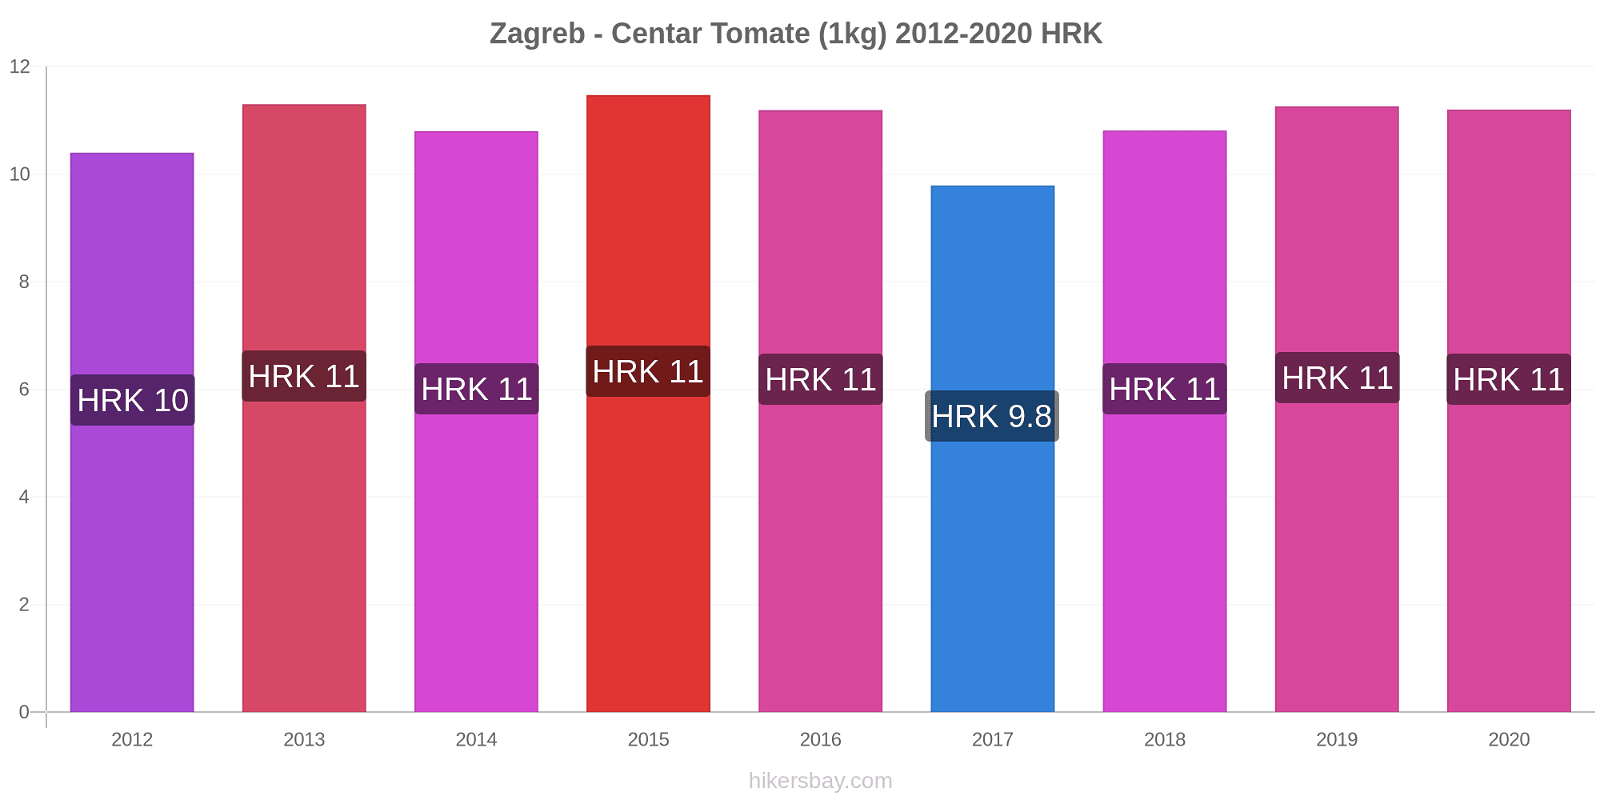 Zagreb - Centar changements de prix Tomate (1kg) hikersbay.com